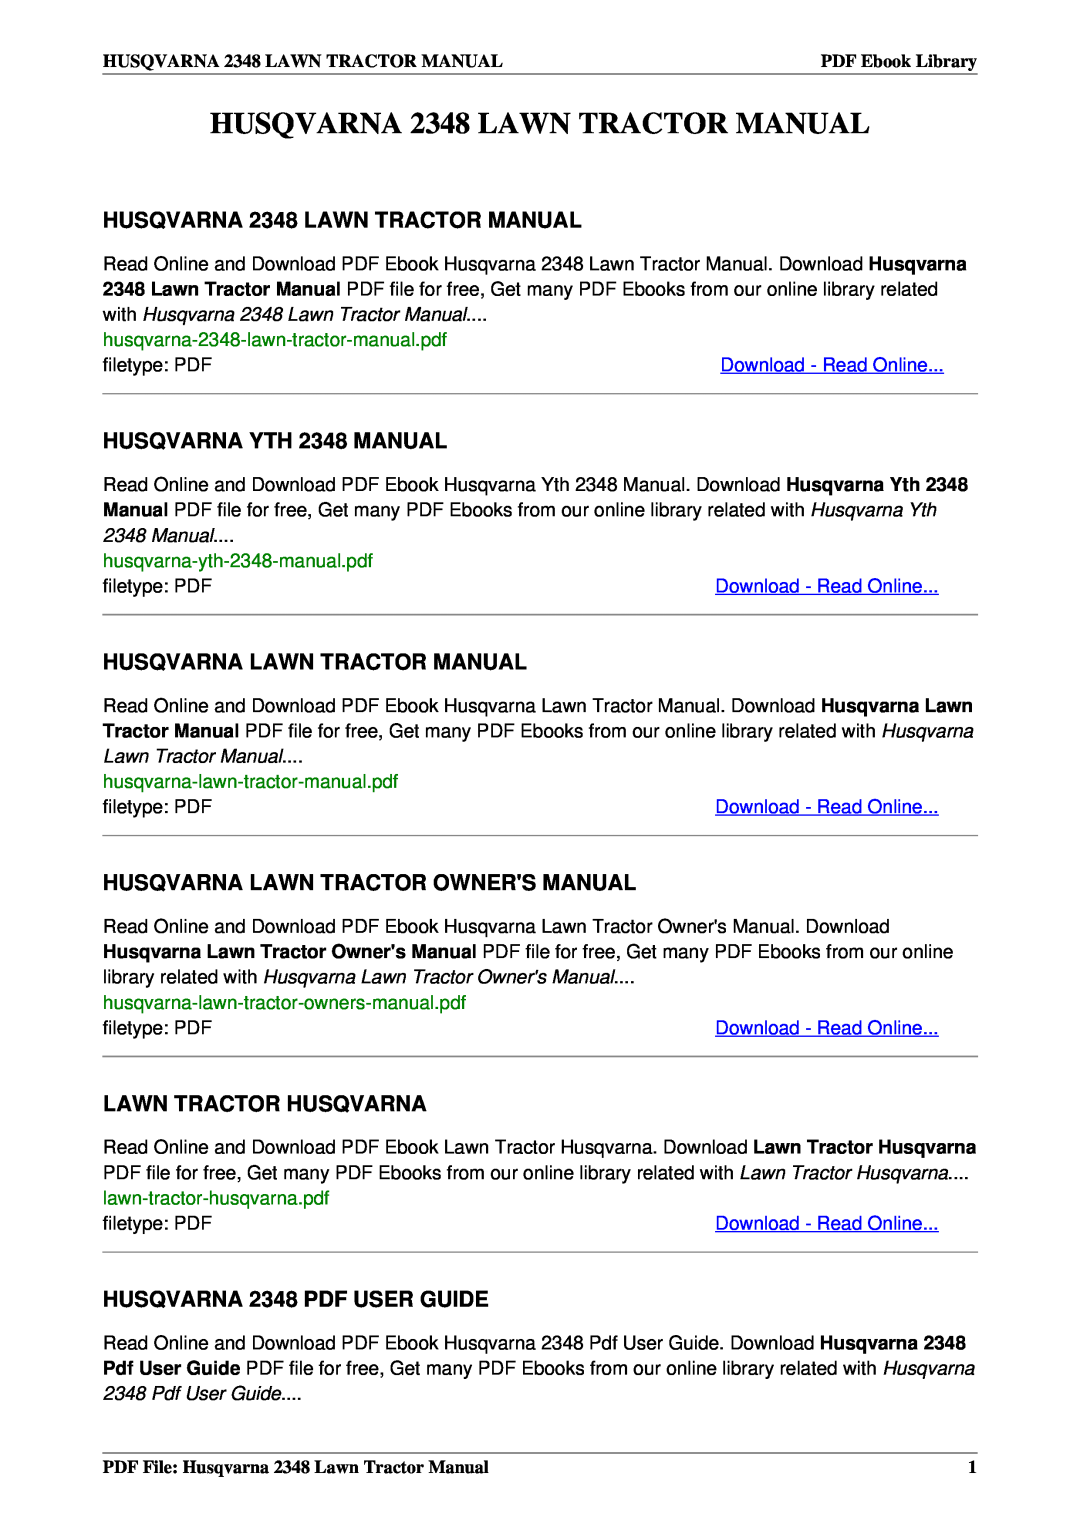 Husqvarna owner manual HUSQVARNA 2348 LAWN TRACTOR MANUAL, HUSQVARNA YTH 2348 MANUAL, Husqvarna Lawn Tractor Manual 